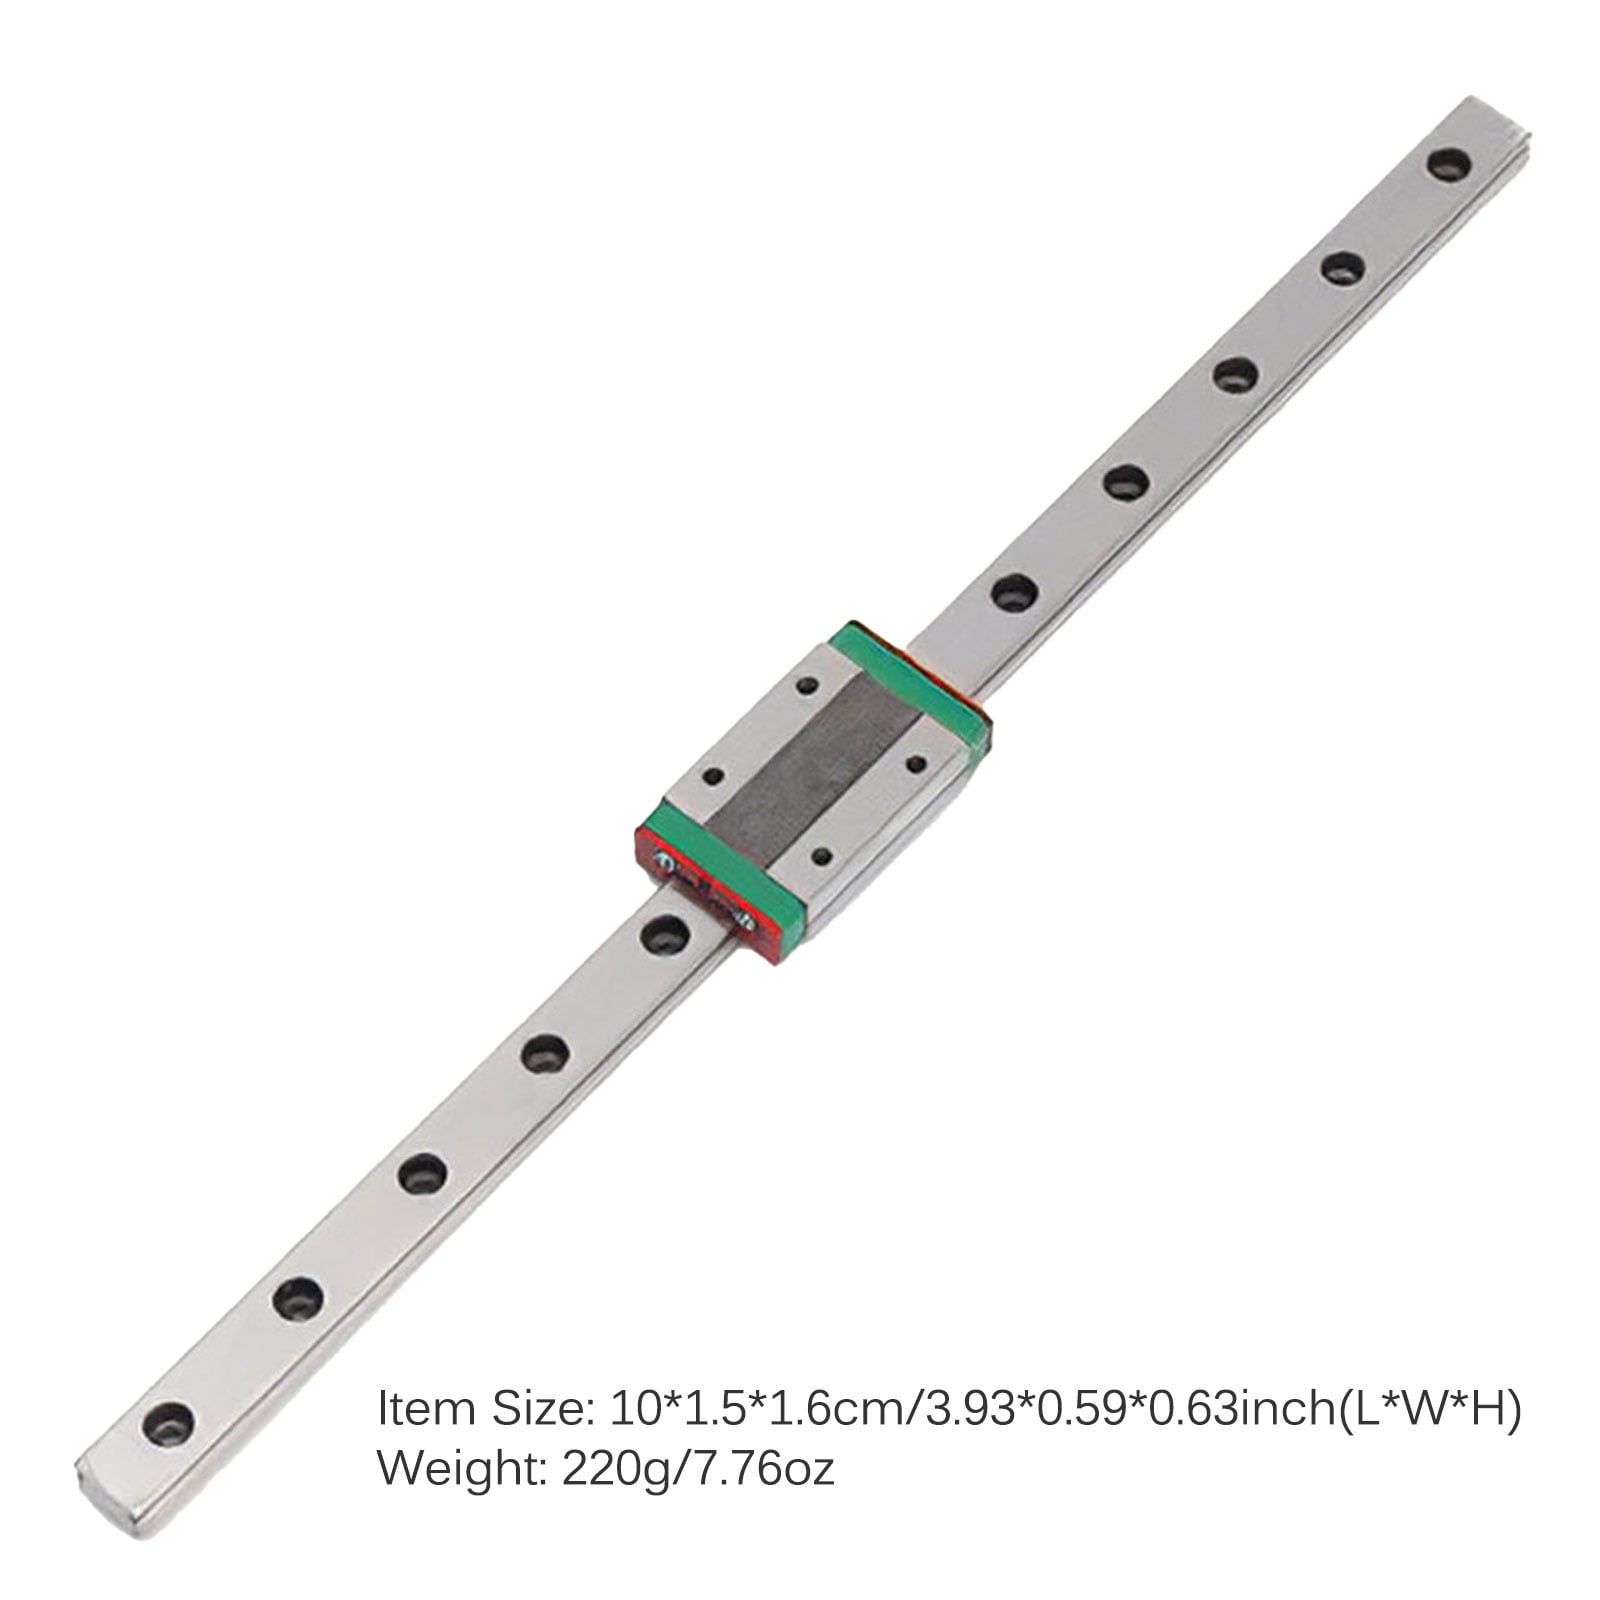 Mini MGN15H Extension Guide Rail Sliding Block for Linear Sliding Device 